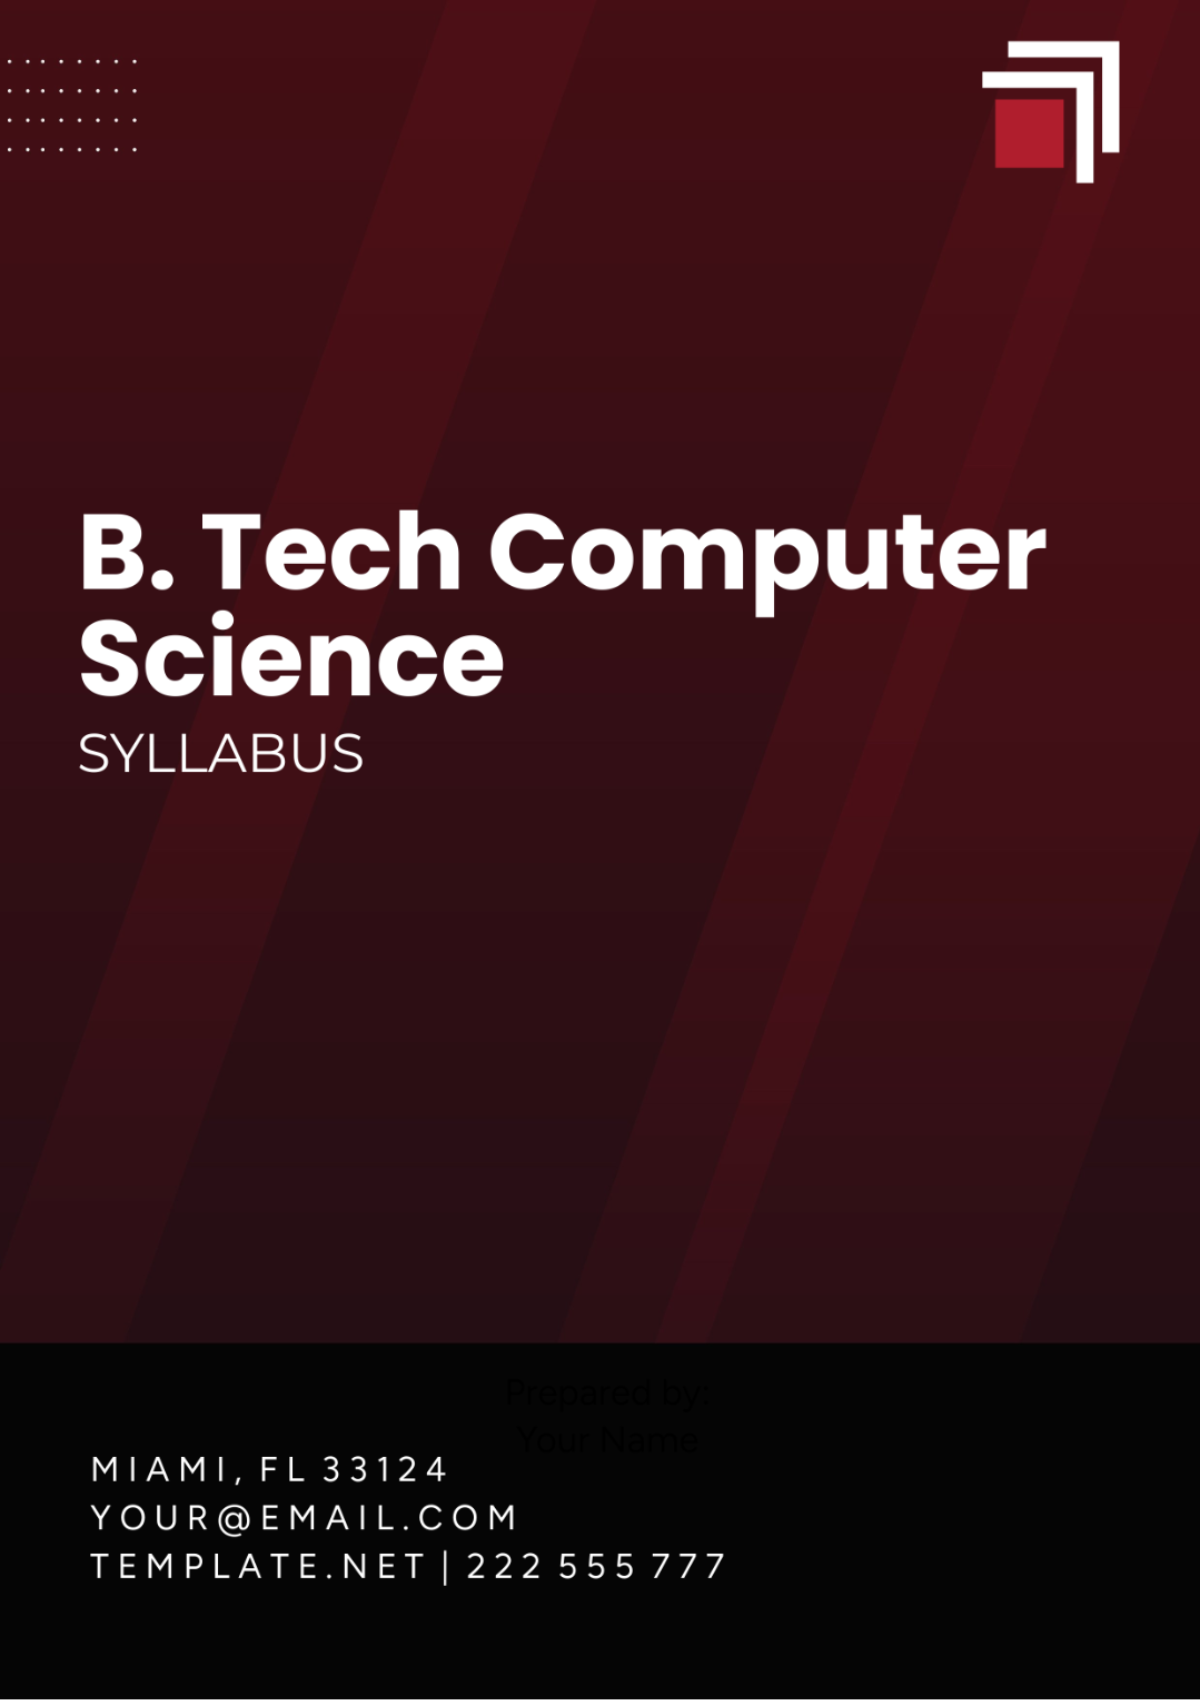 B Tech Computer Science Syllabus Template